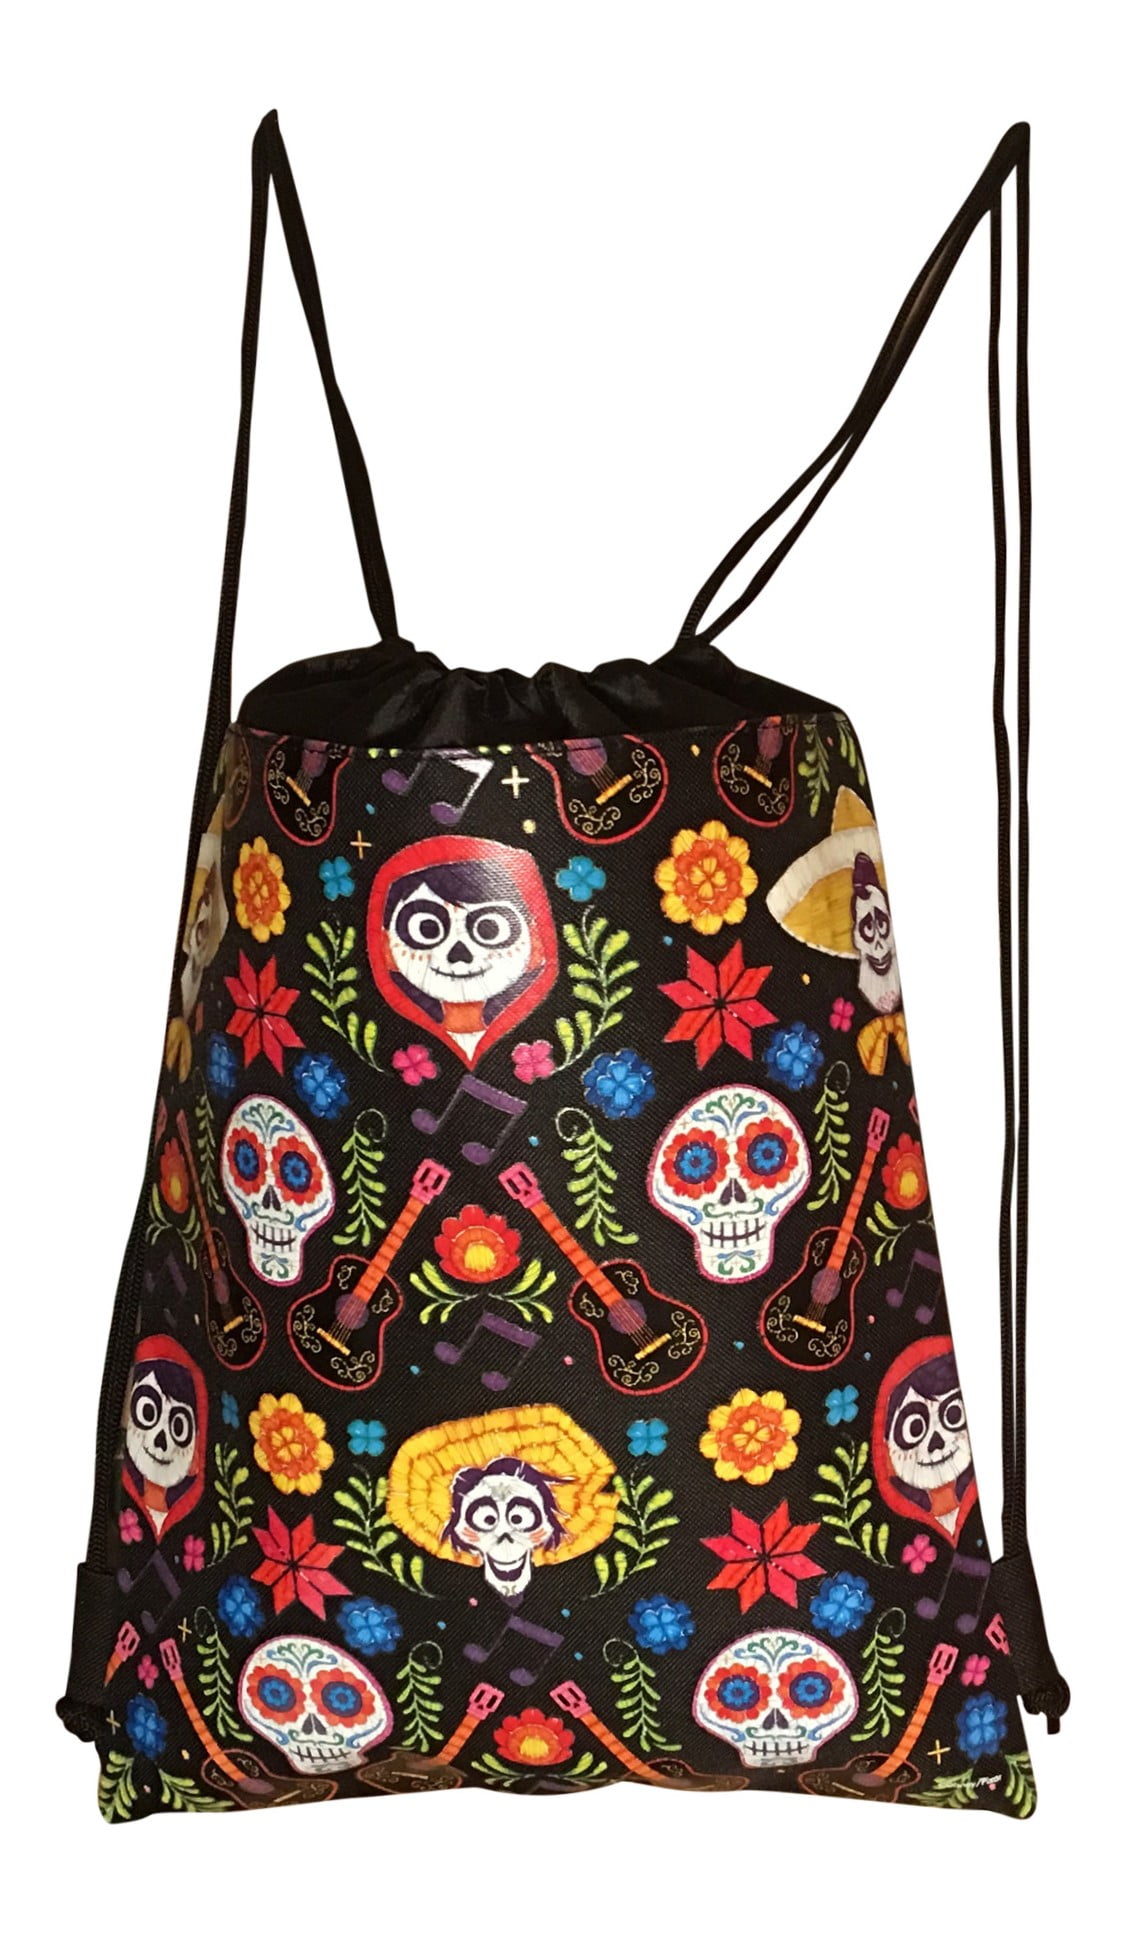 Disney Coco Drawstring Backpack Black Skull Bone - Walmart.com